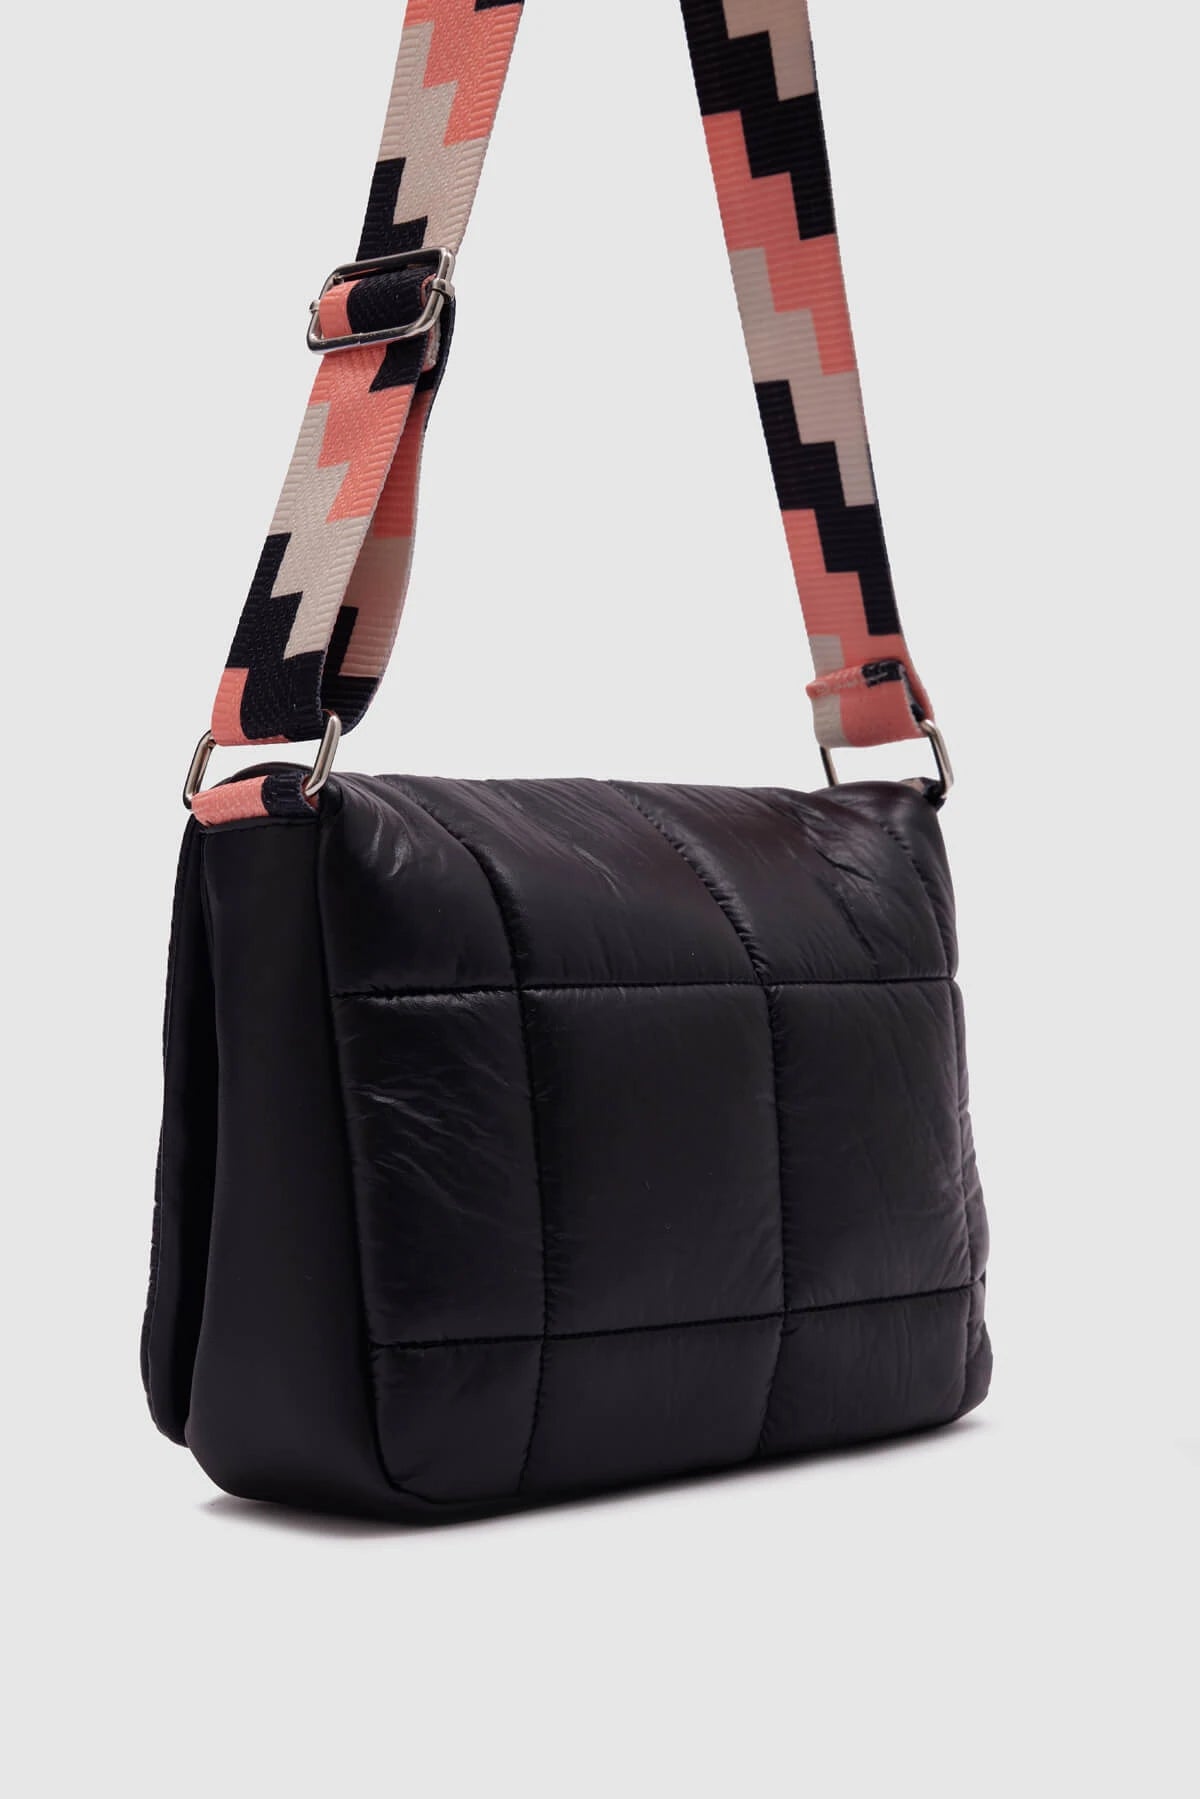 Lorenzo Quilted Color Crossbody Bag crossbody bag LUNARITY GARAGE Black  